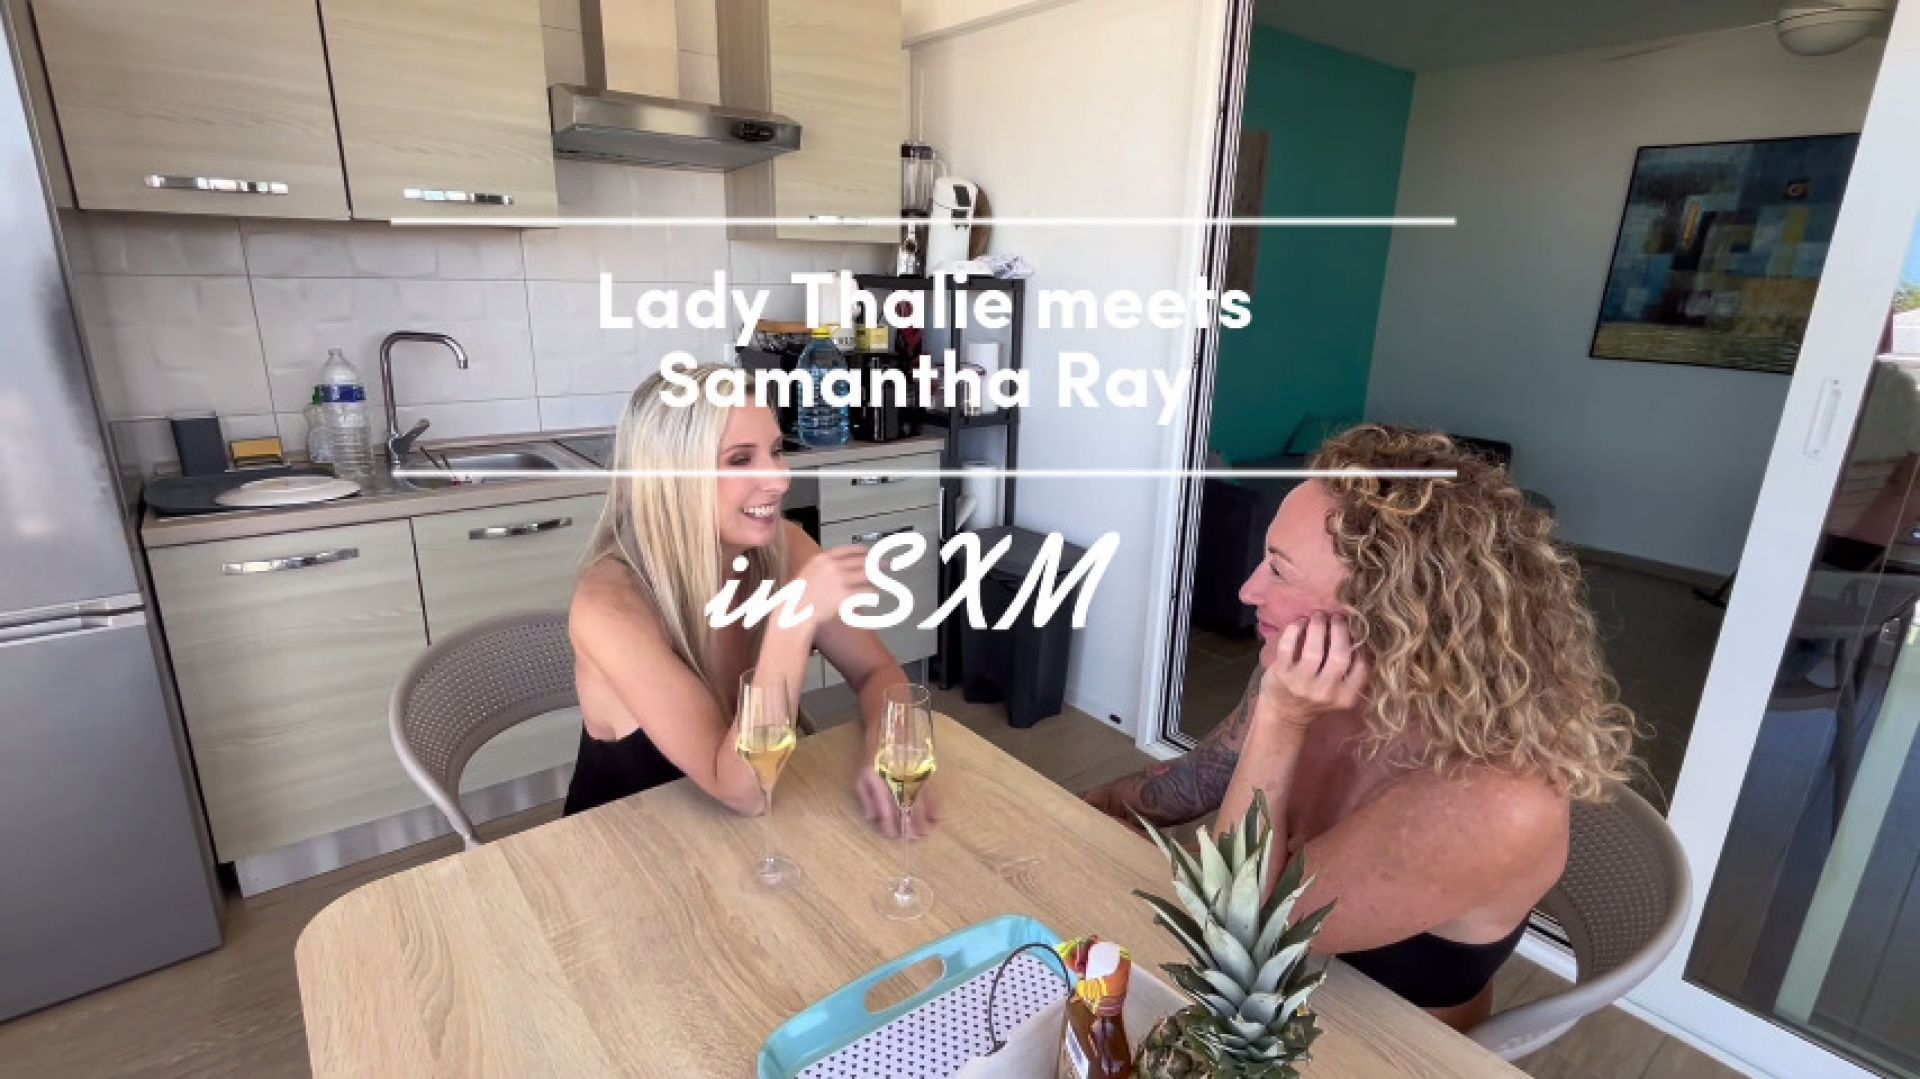 Lady Thalie meets Samantha Ray in SXM